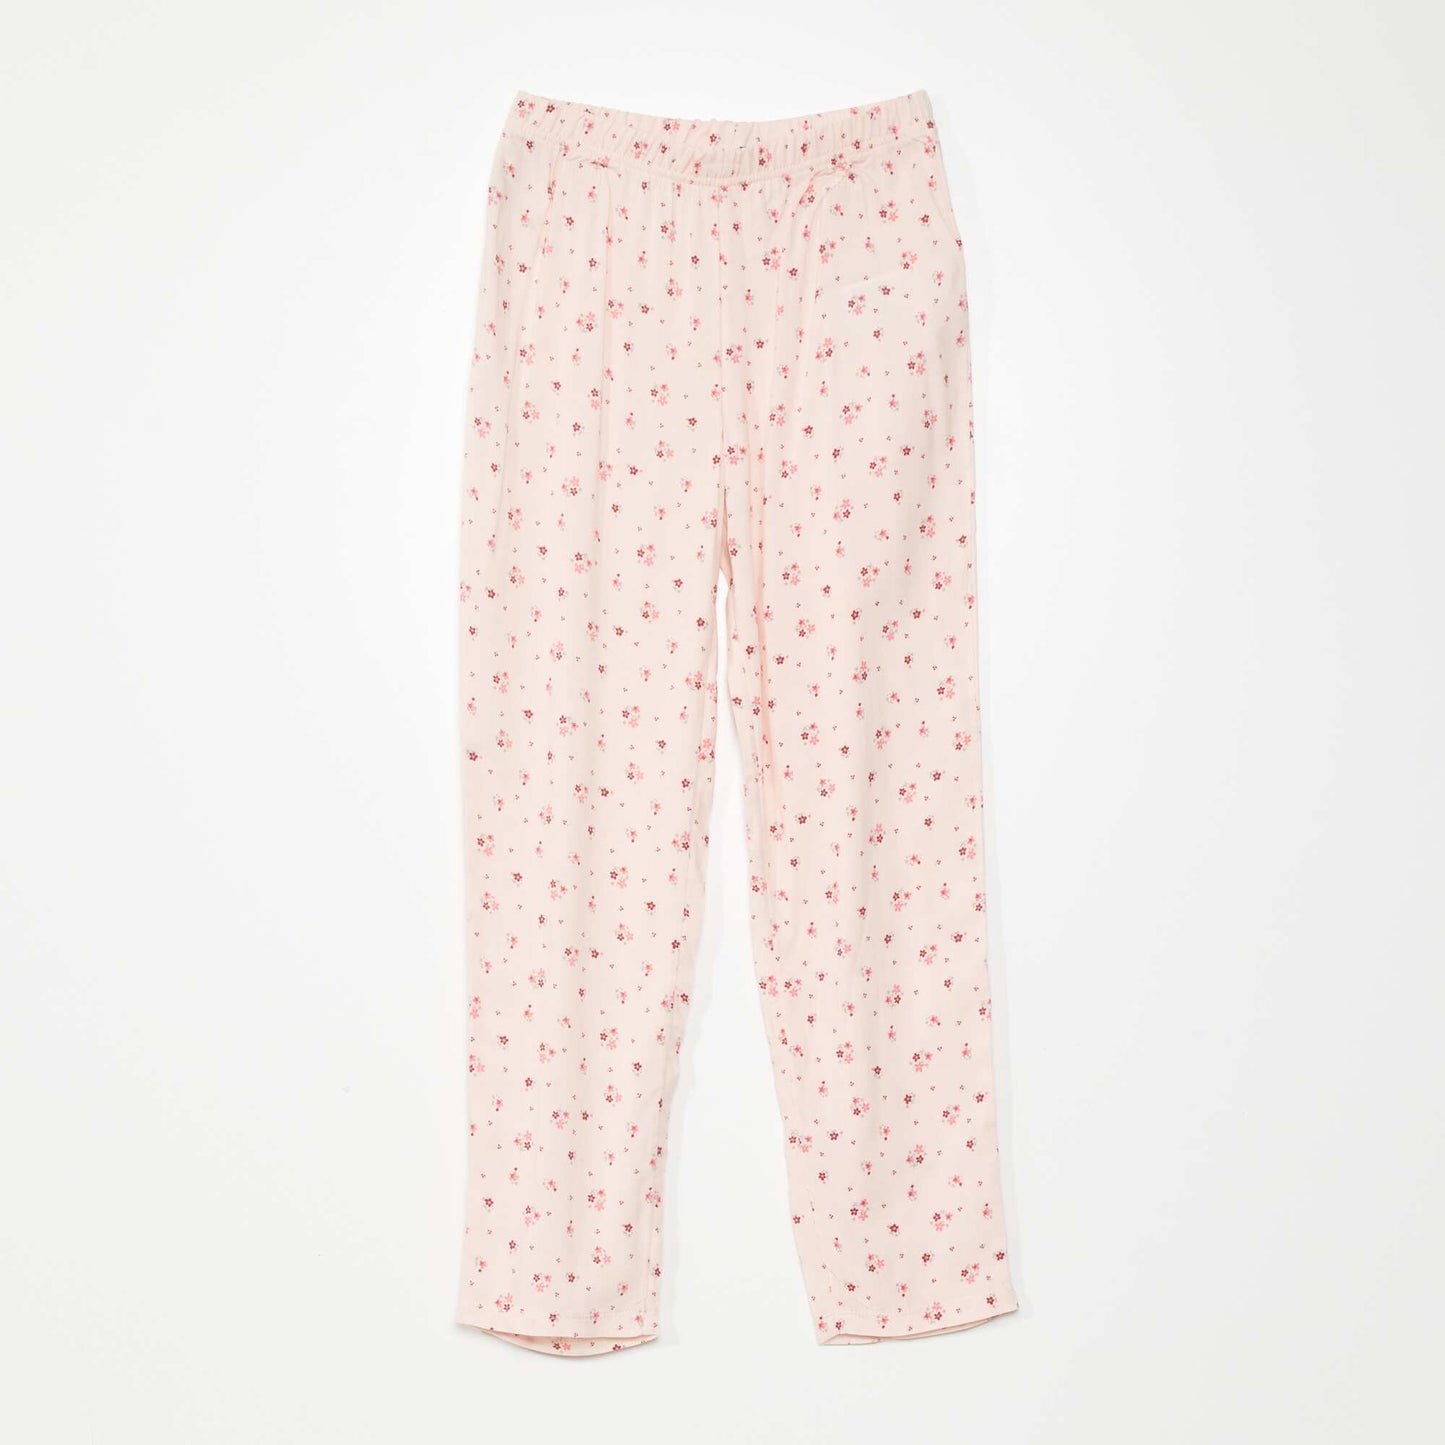 Pyjama long en jersey - 2 pi ces Blanc/rose